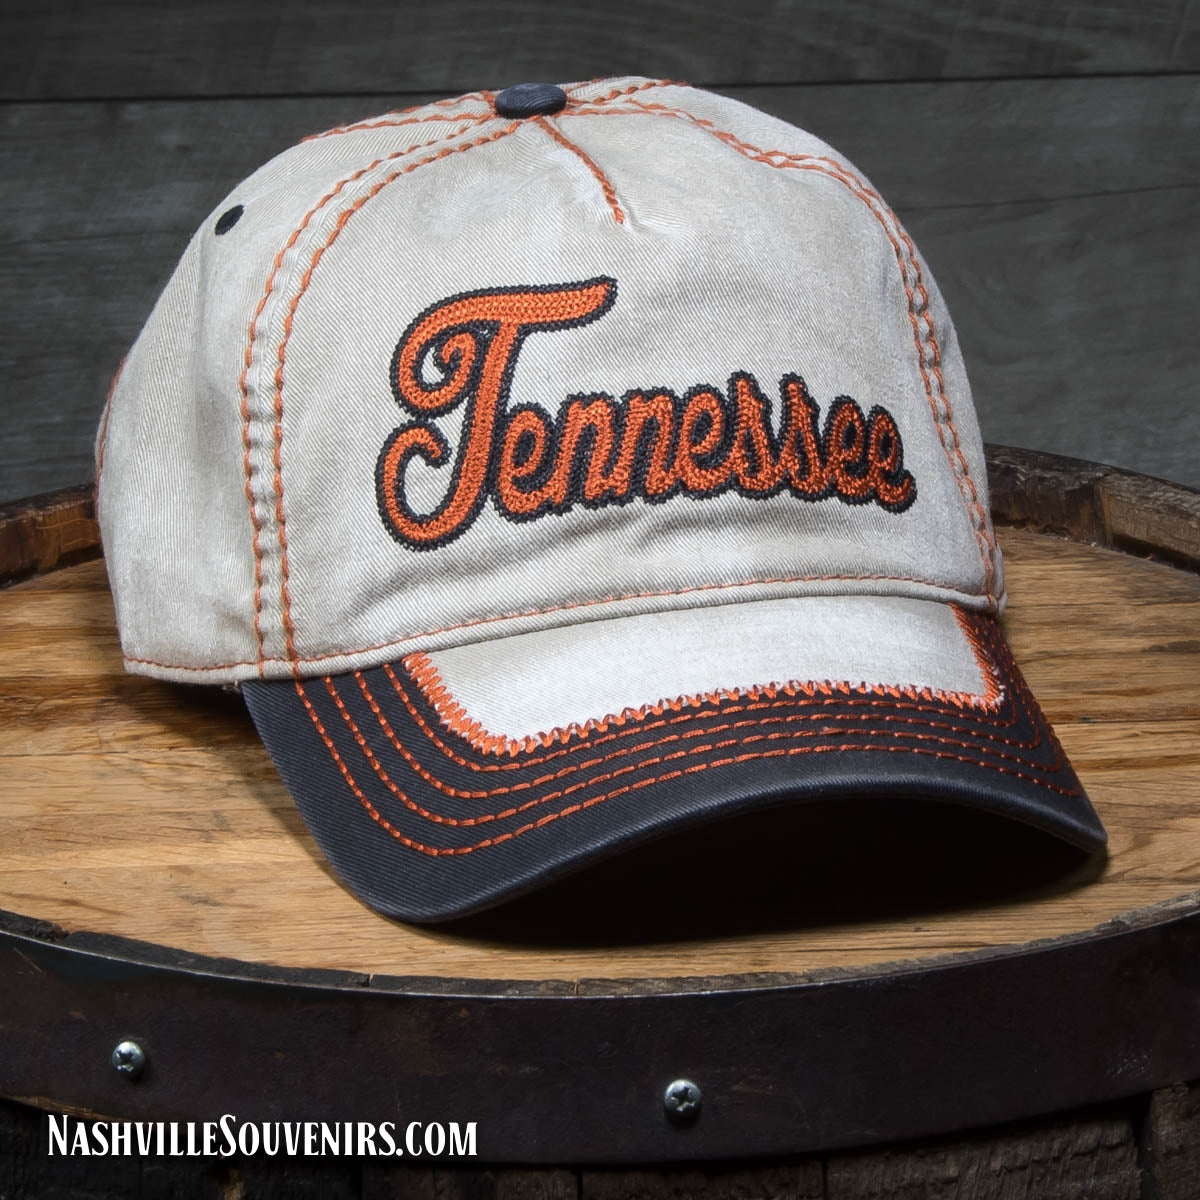 Tennessee Ball Cap